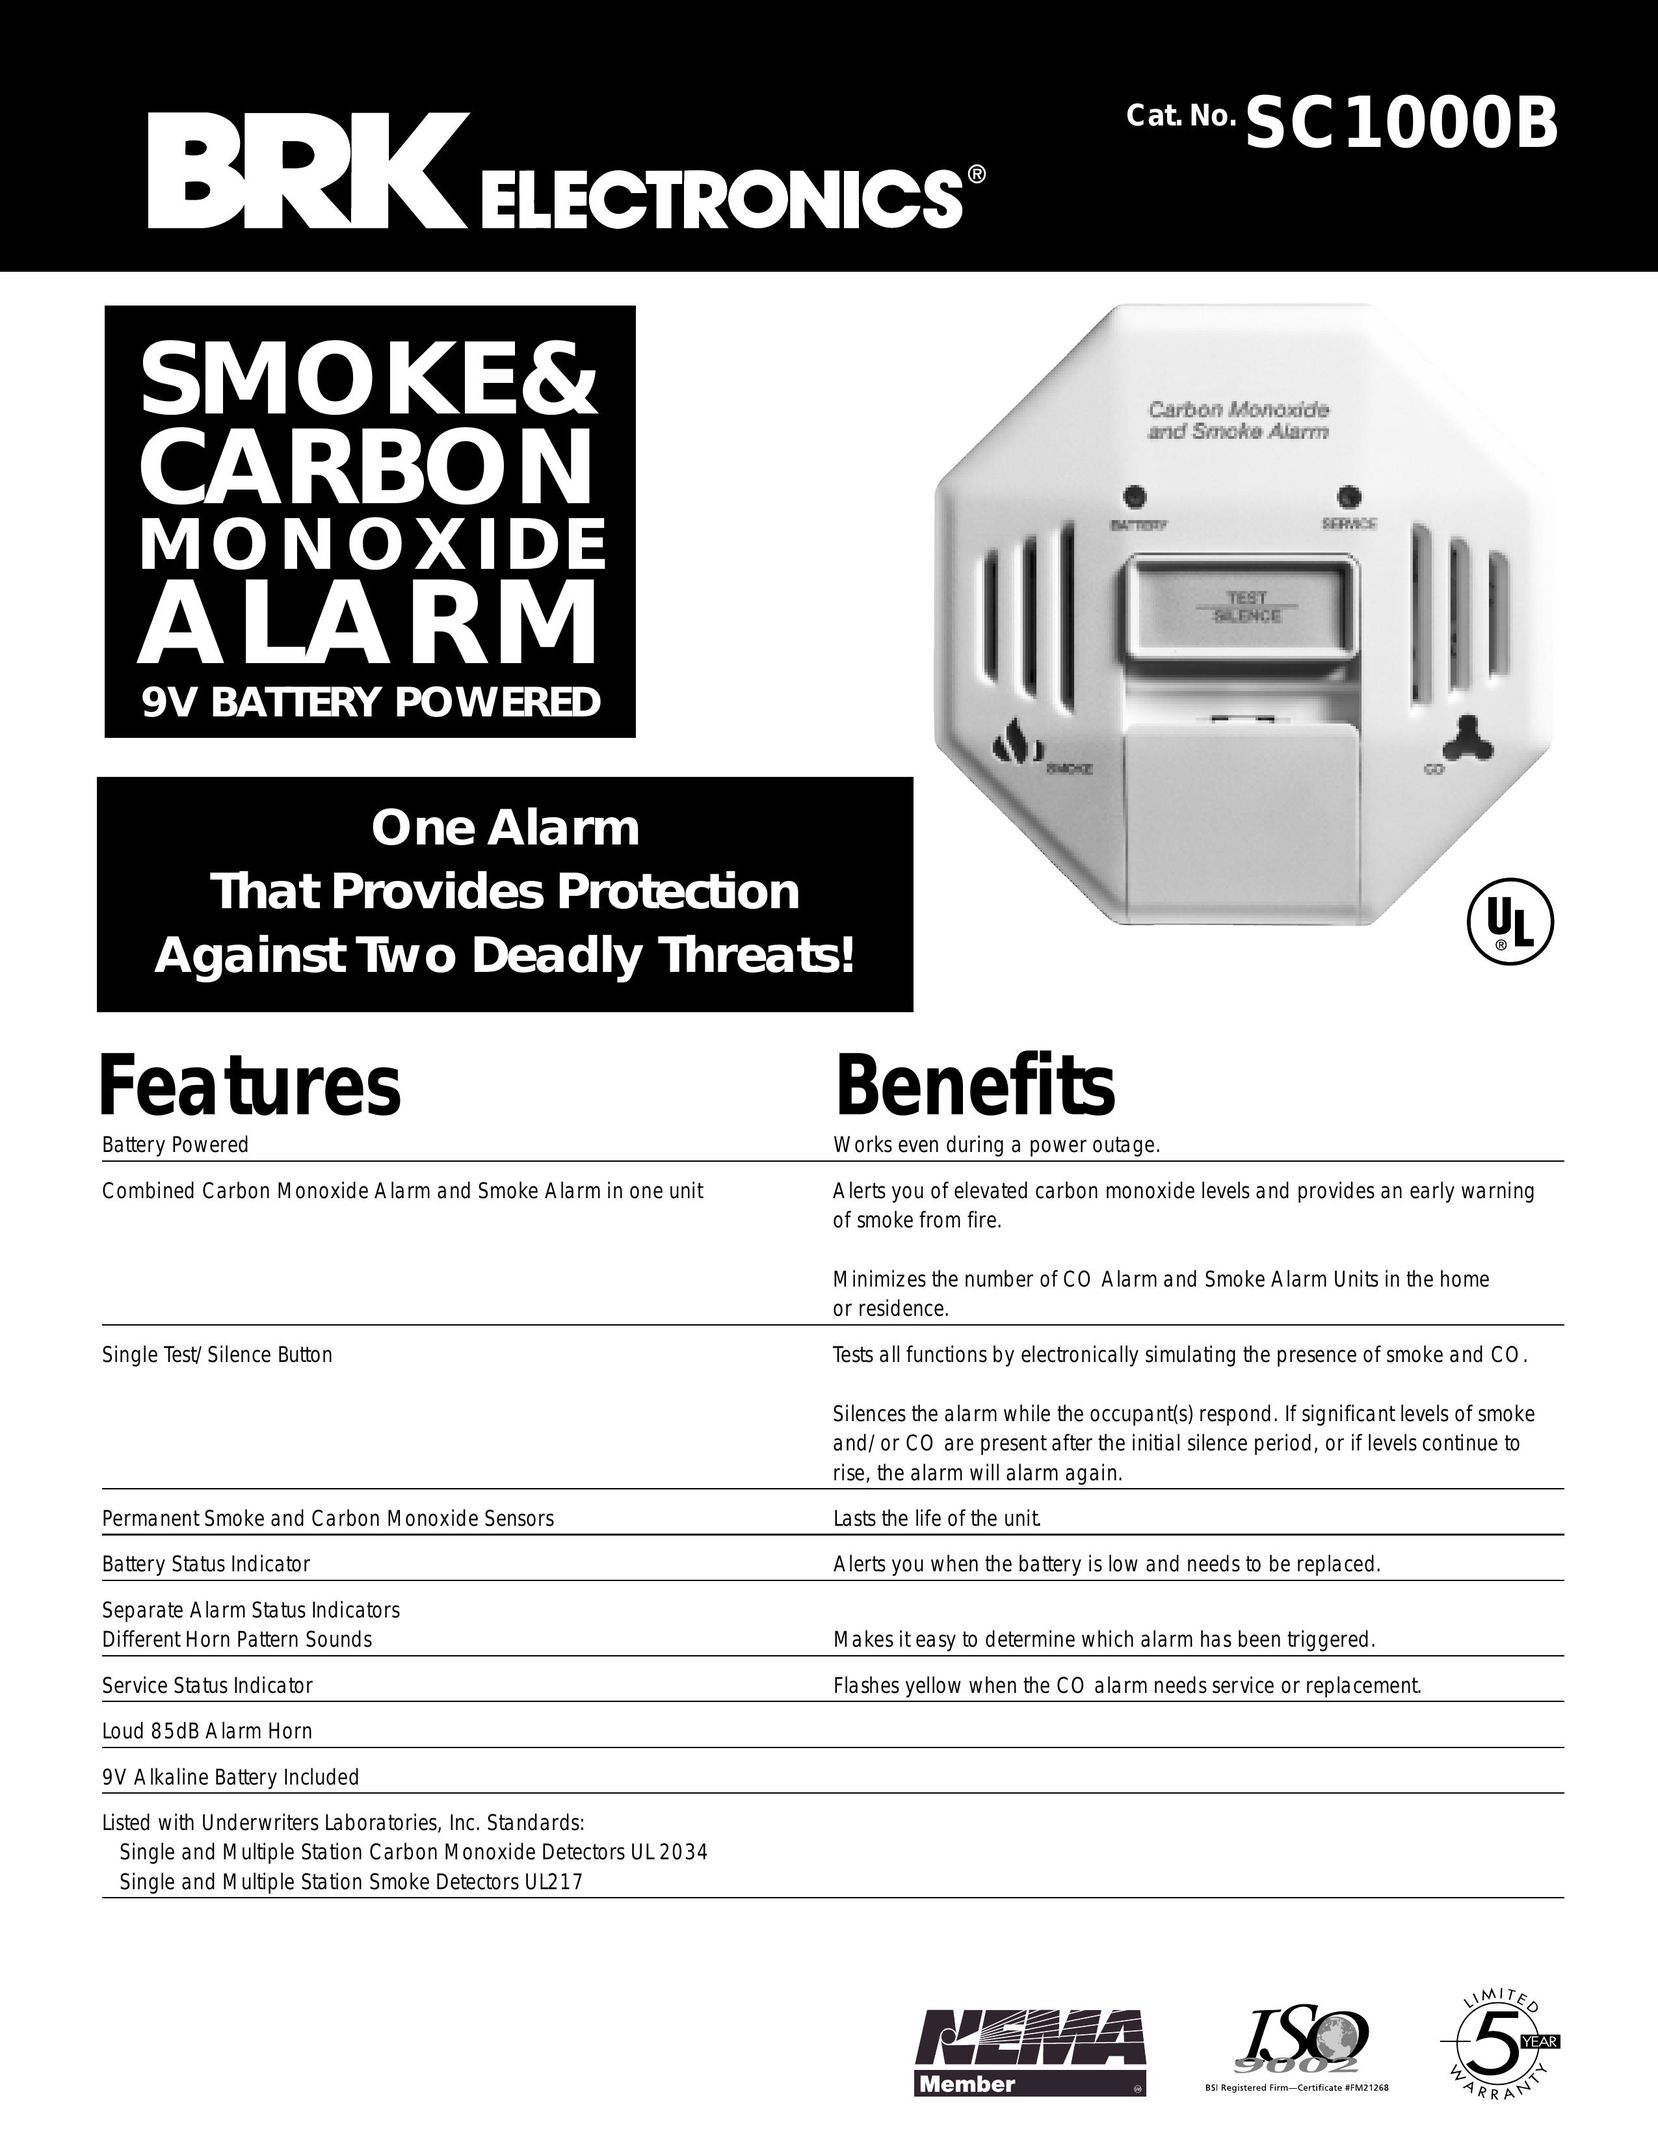 BRK electronic SC1000B Carbon Monoxide Alarm User Manual